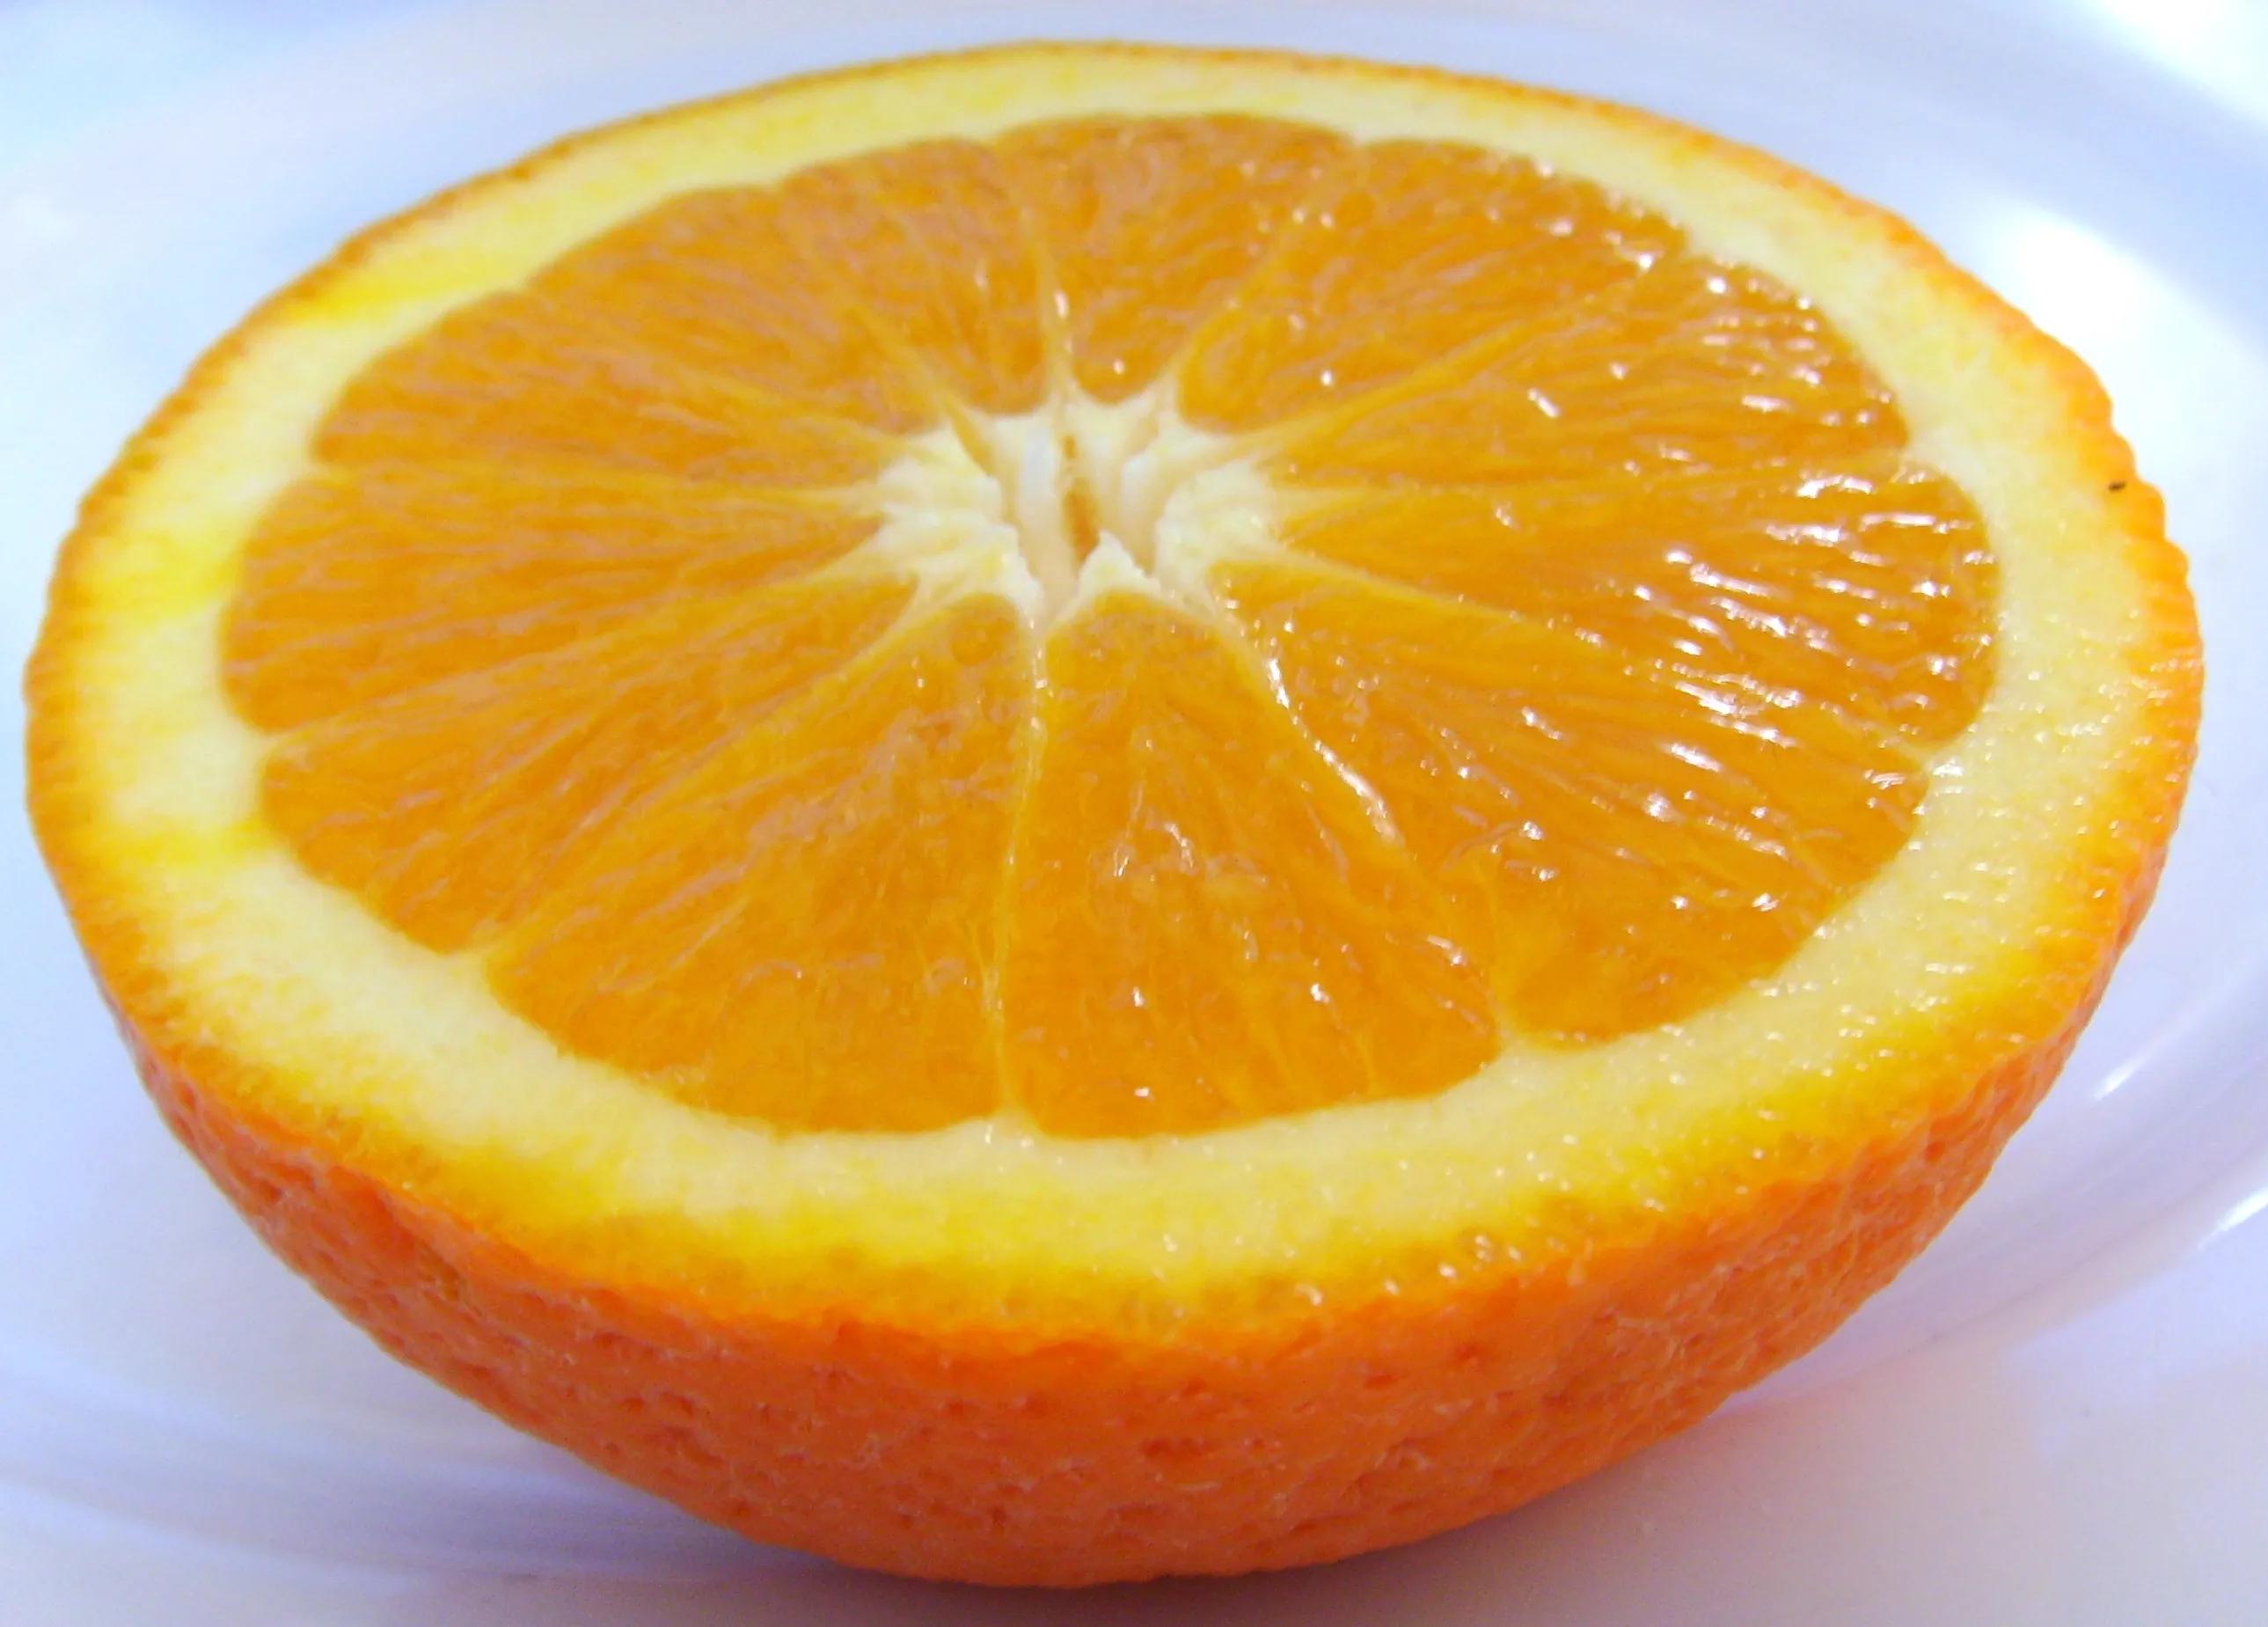 Apfelsine oder Orange? - Lebensmittelfotos.com